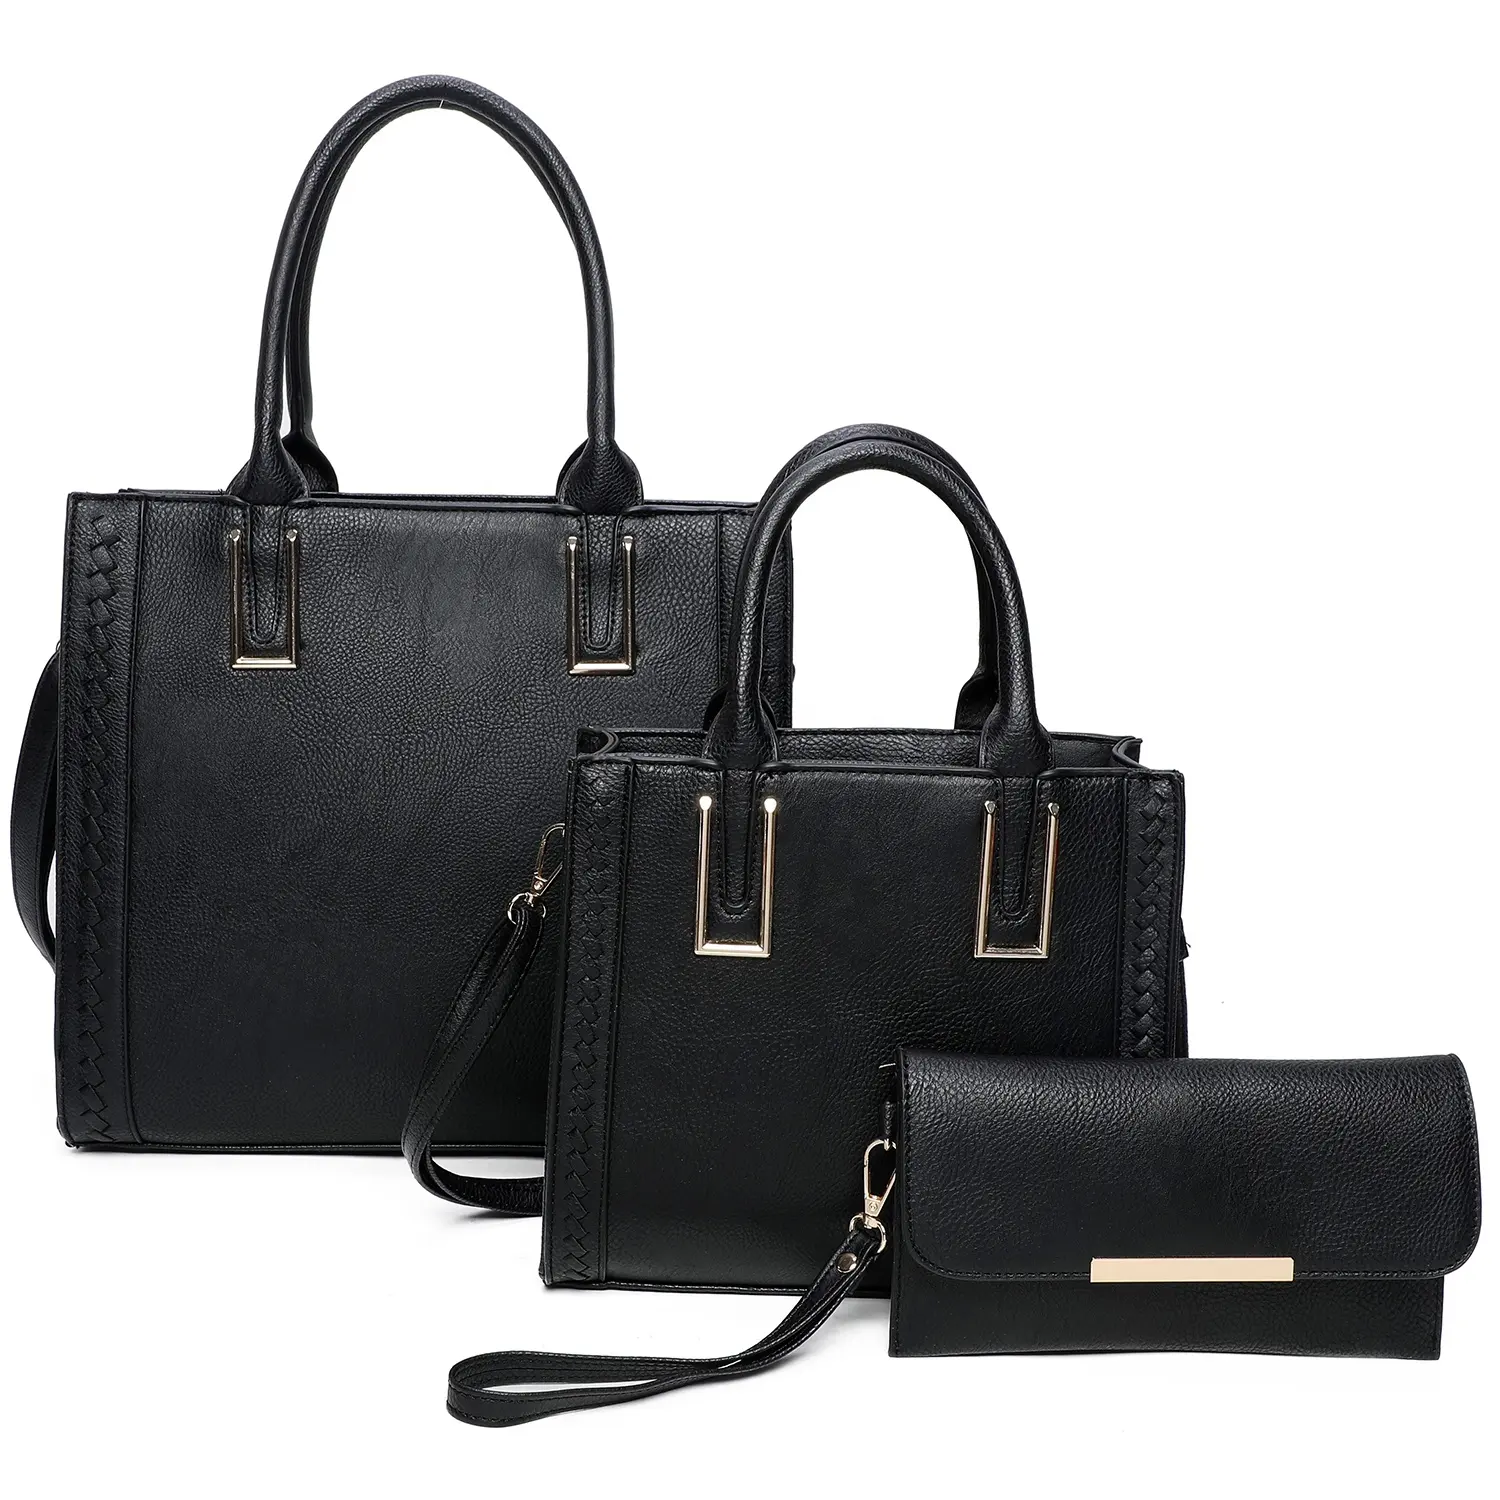 Wholesale 2021 Pu Leather Ladies Fashion Handbag Set 3 in 1 Women Bag Set Tote Boxy Satchel Bag